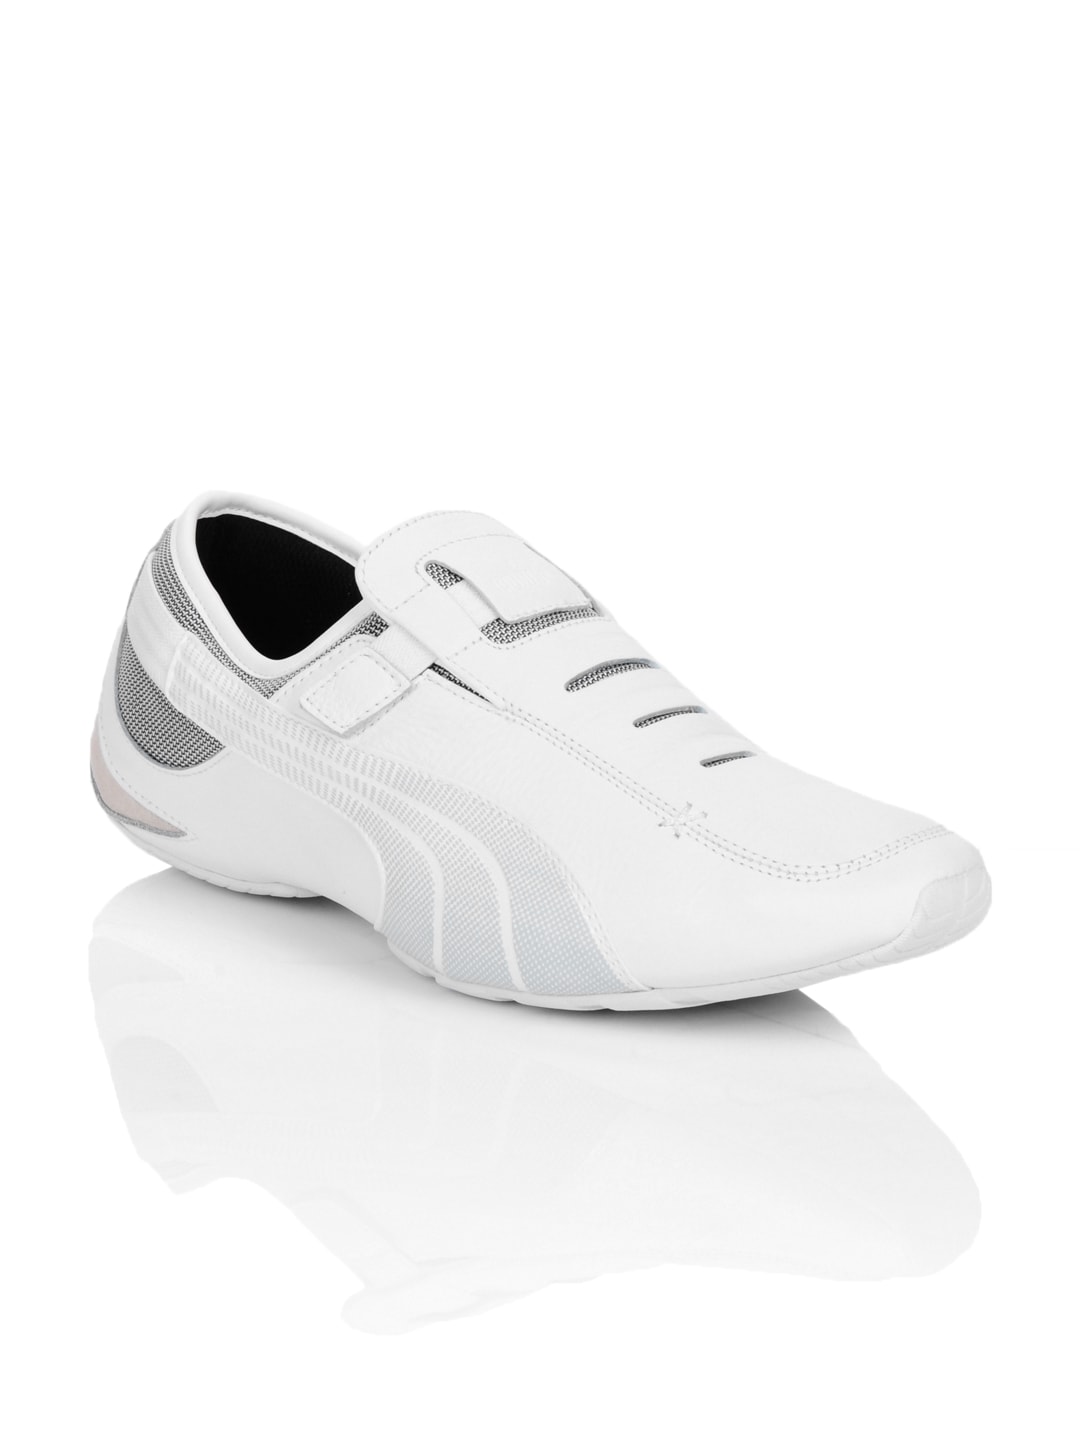 Puma Men Vedano White Shoes